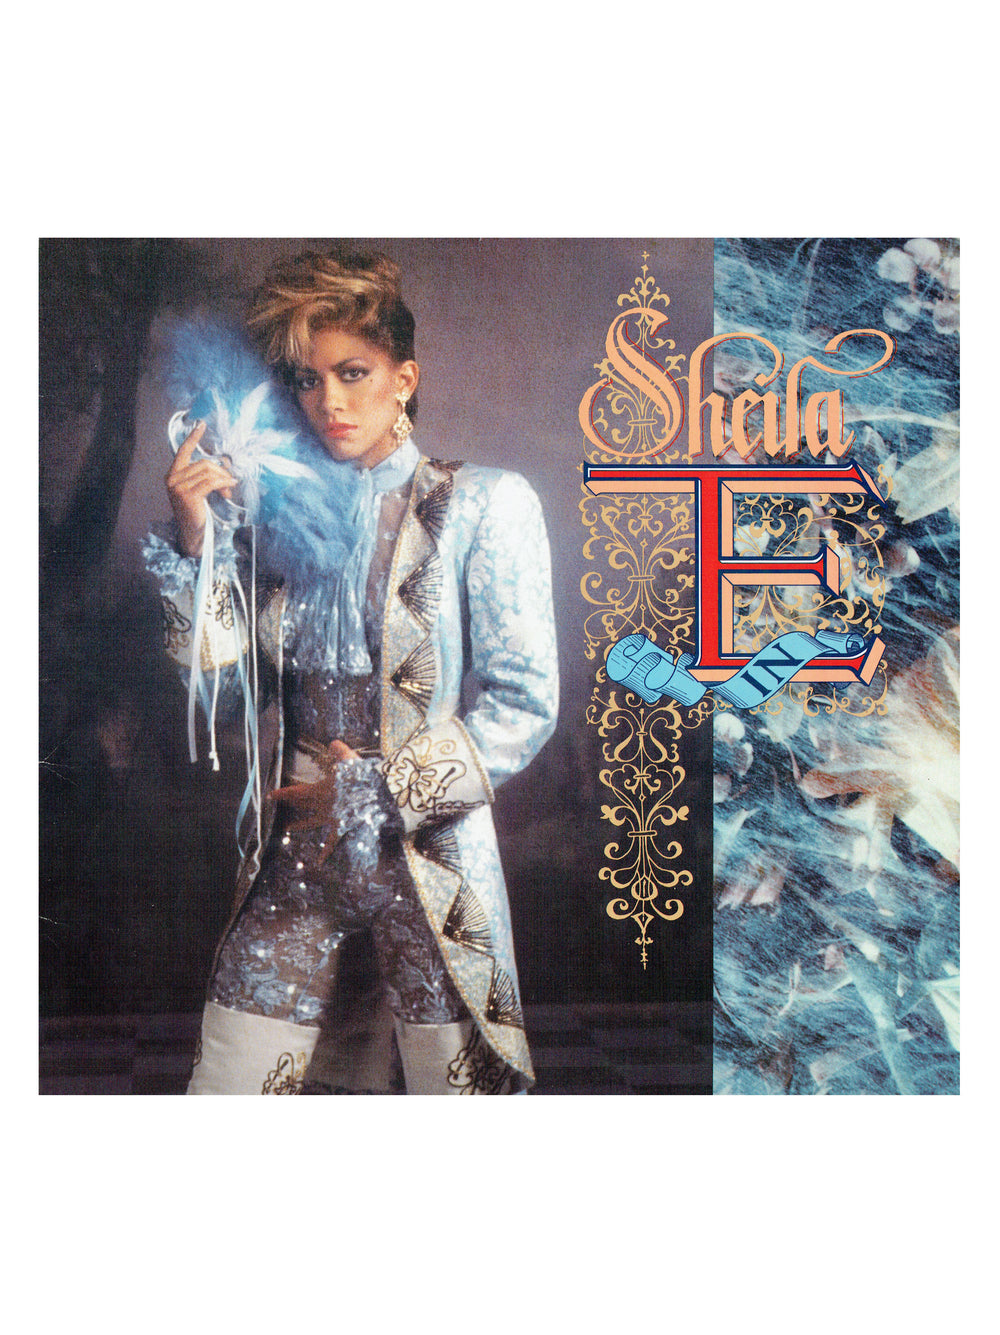 Prince – Sheila E In Romance 1600 Vinyl Album USA Release Original 1985 Prince